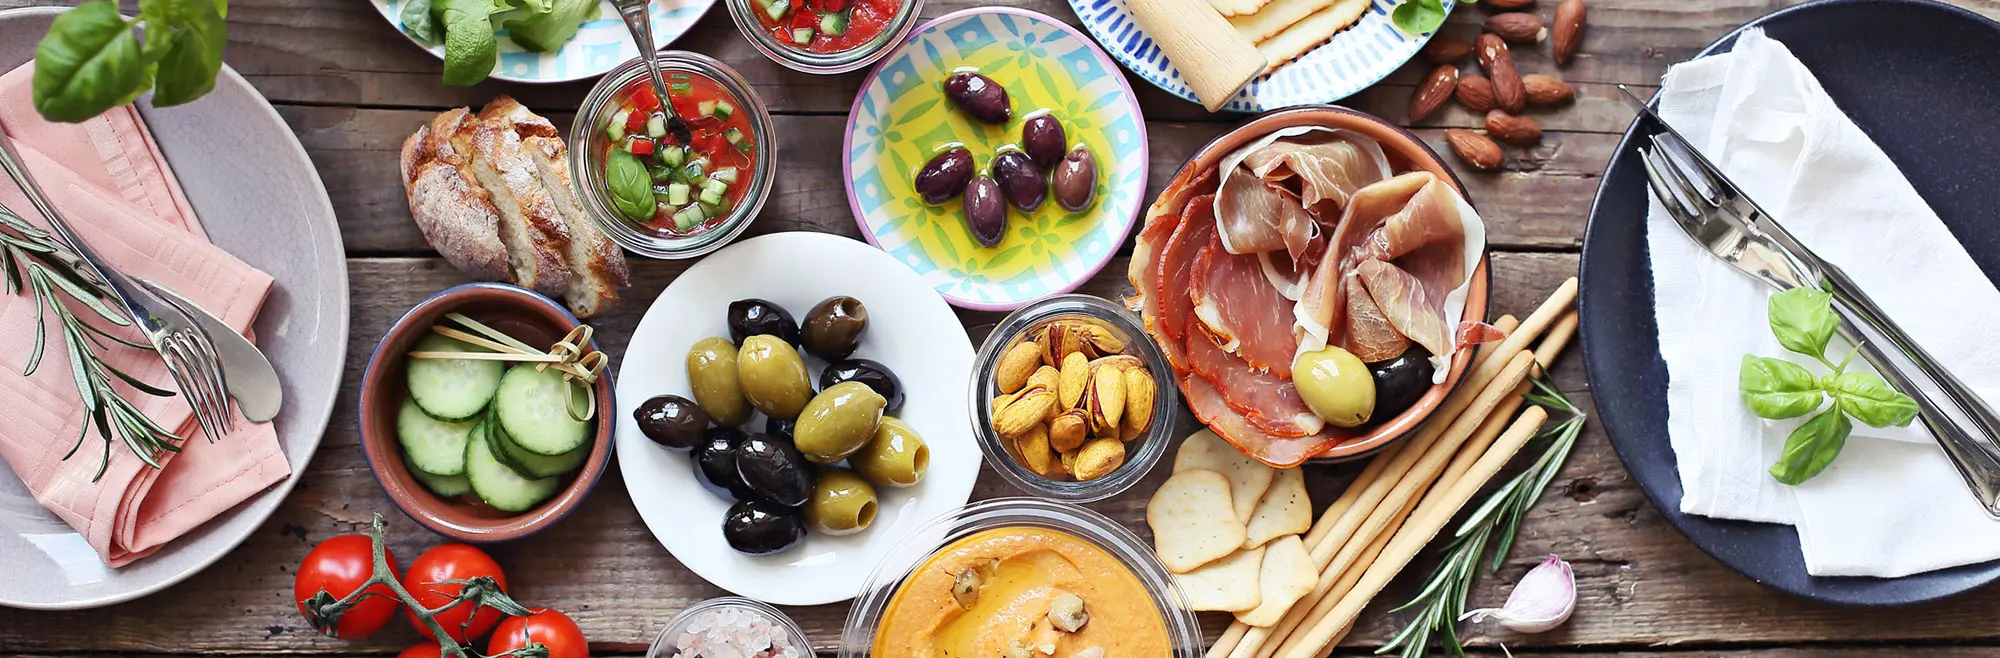 What makes the Mediterranean diet so healthy?